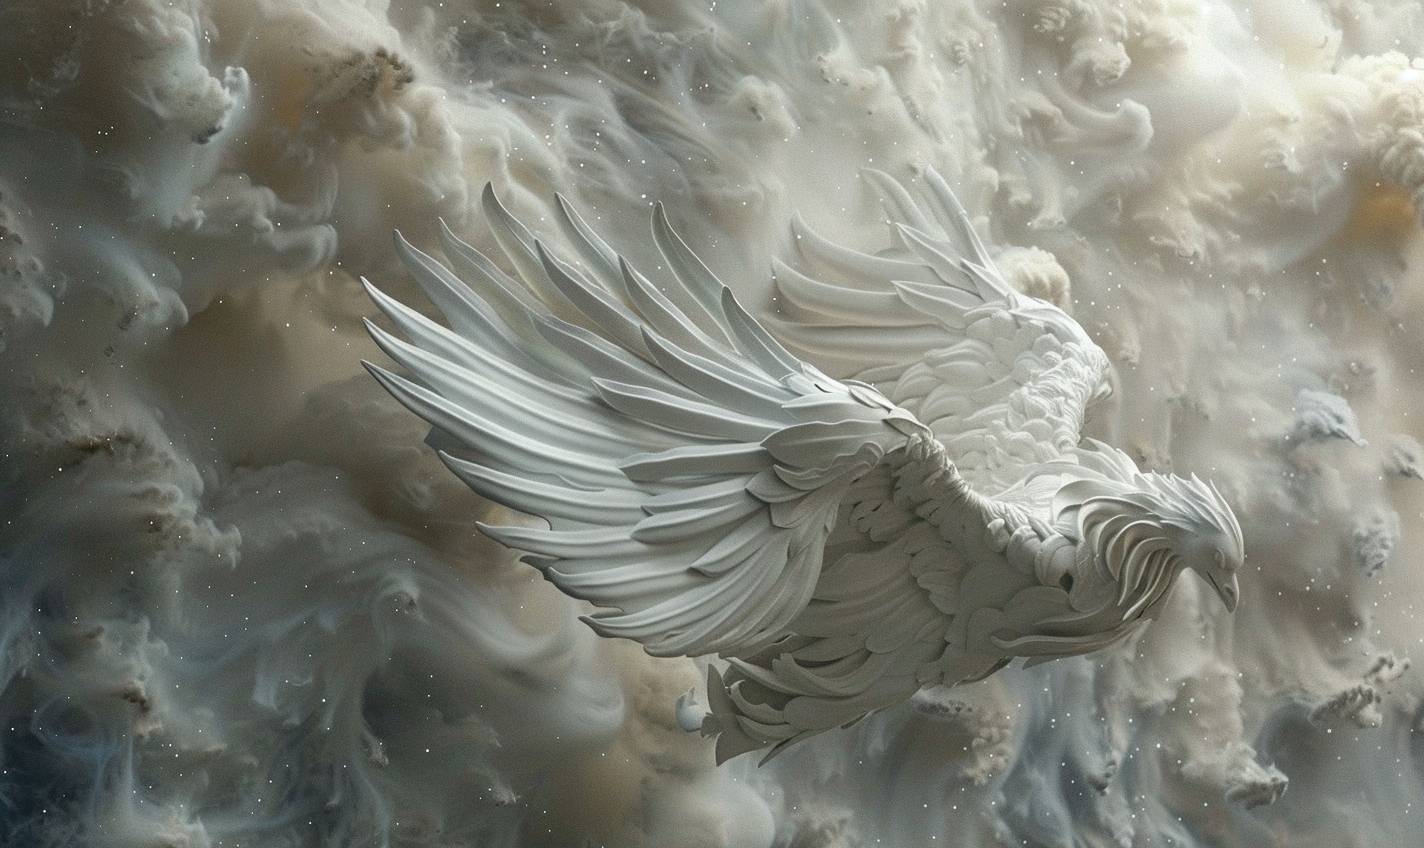 In style of Daniel Arsham, Cosmic phoenix gliding through the cosmos